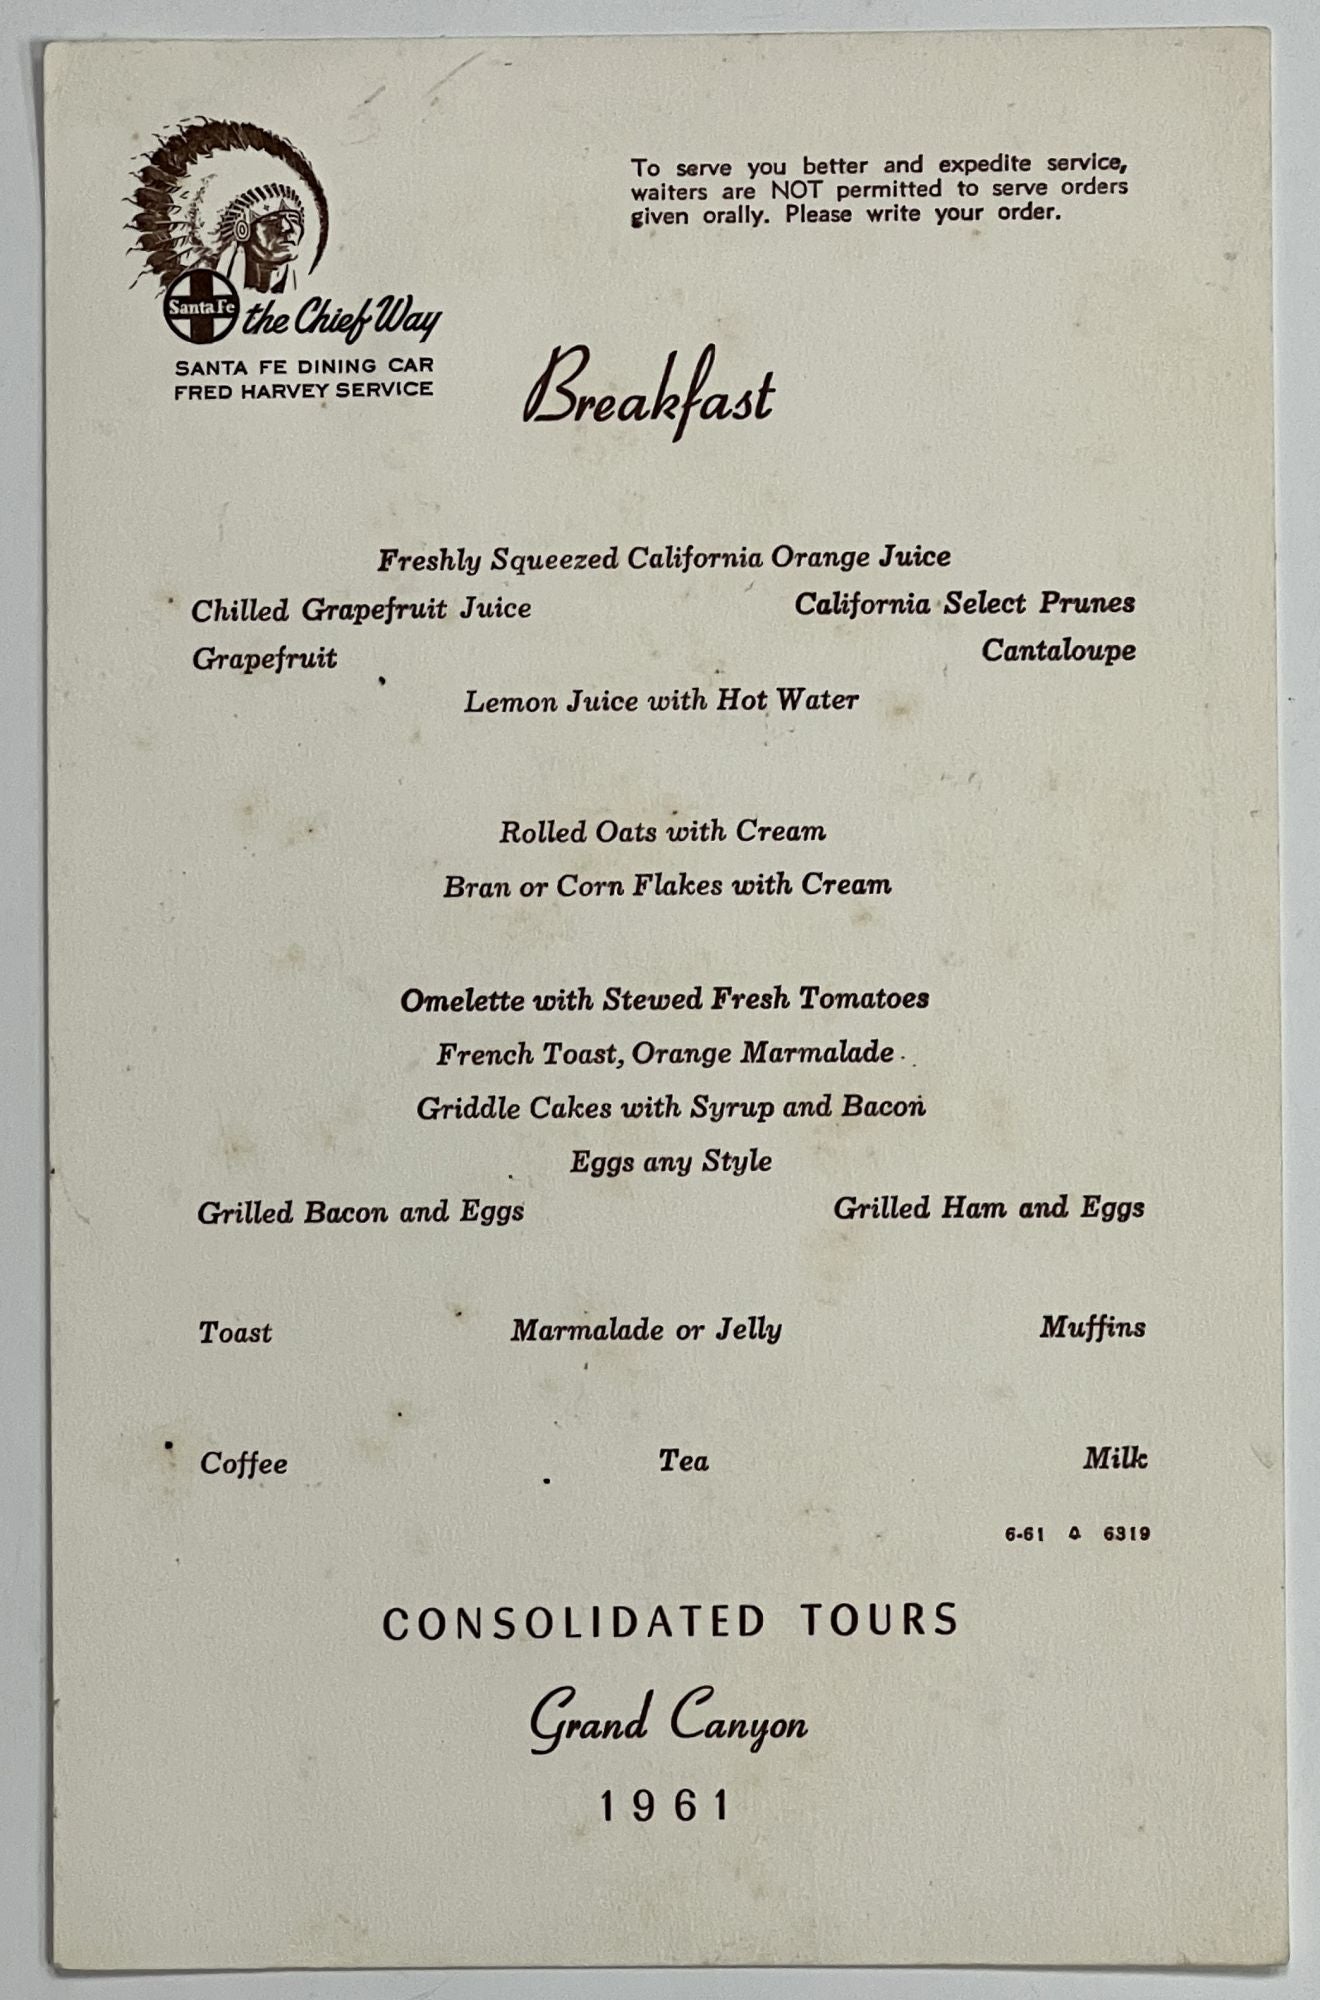 [Consolidated Tours Santa Fe Dining Car Menu] - BREAKFAST MENU. Consolidated Tours - Grand Canyon. 1961